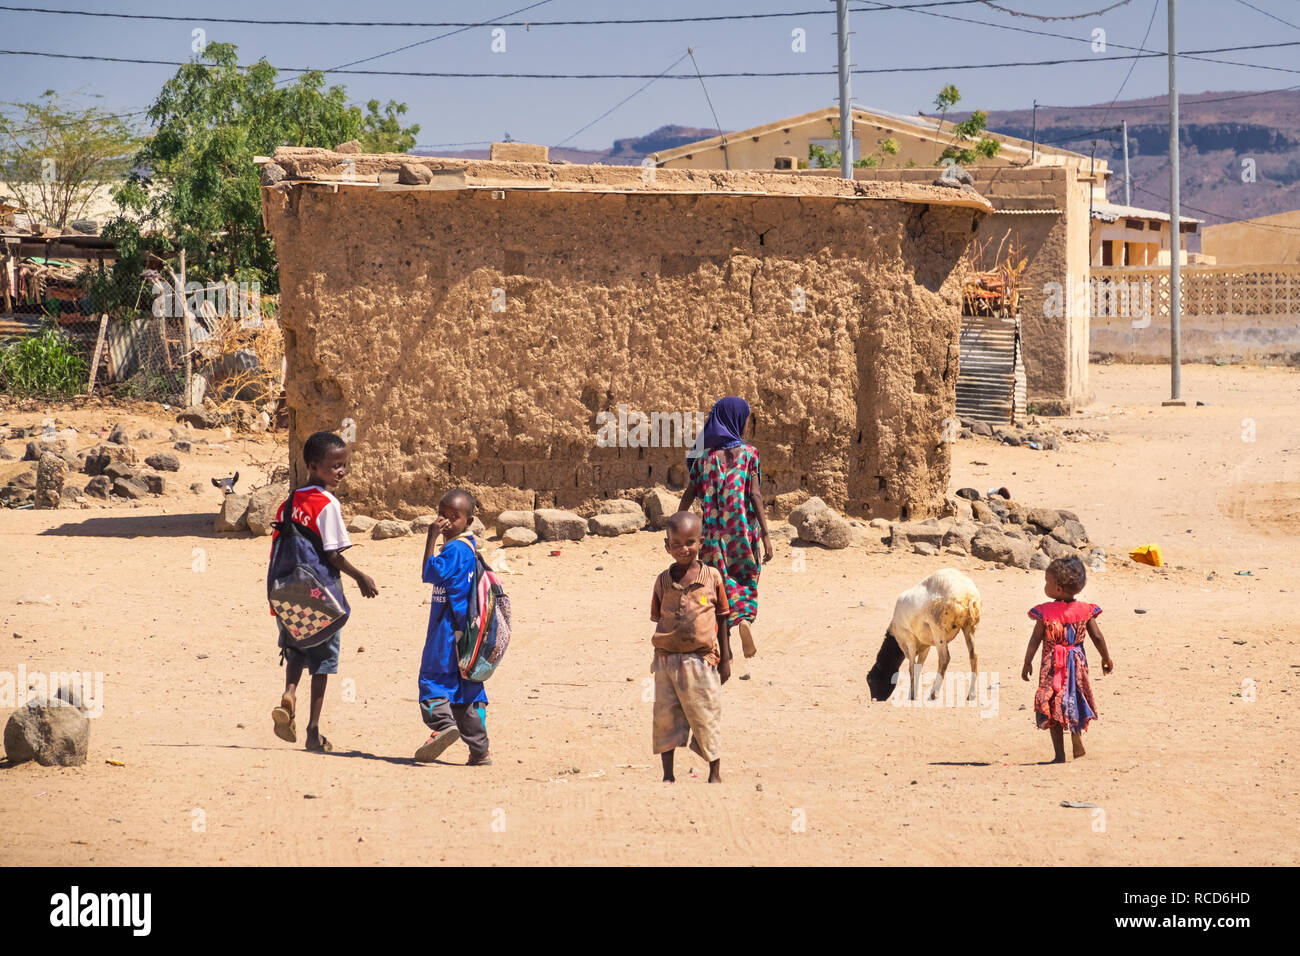 Children go home from school in a village in Western Djibouti. Stock Photo